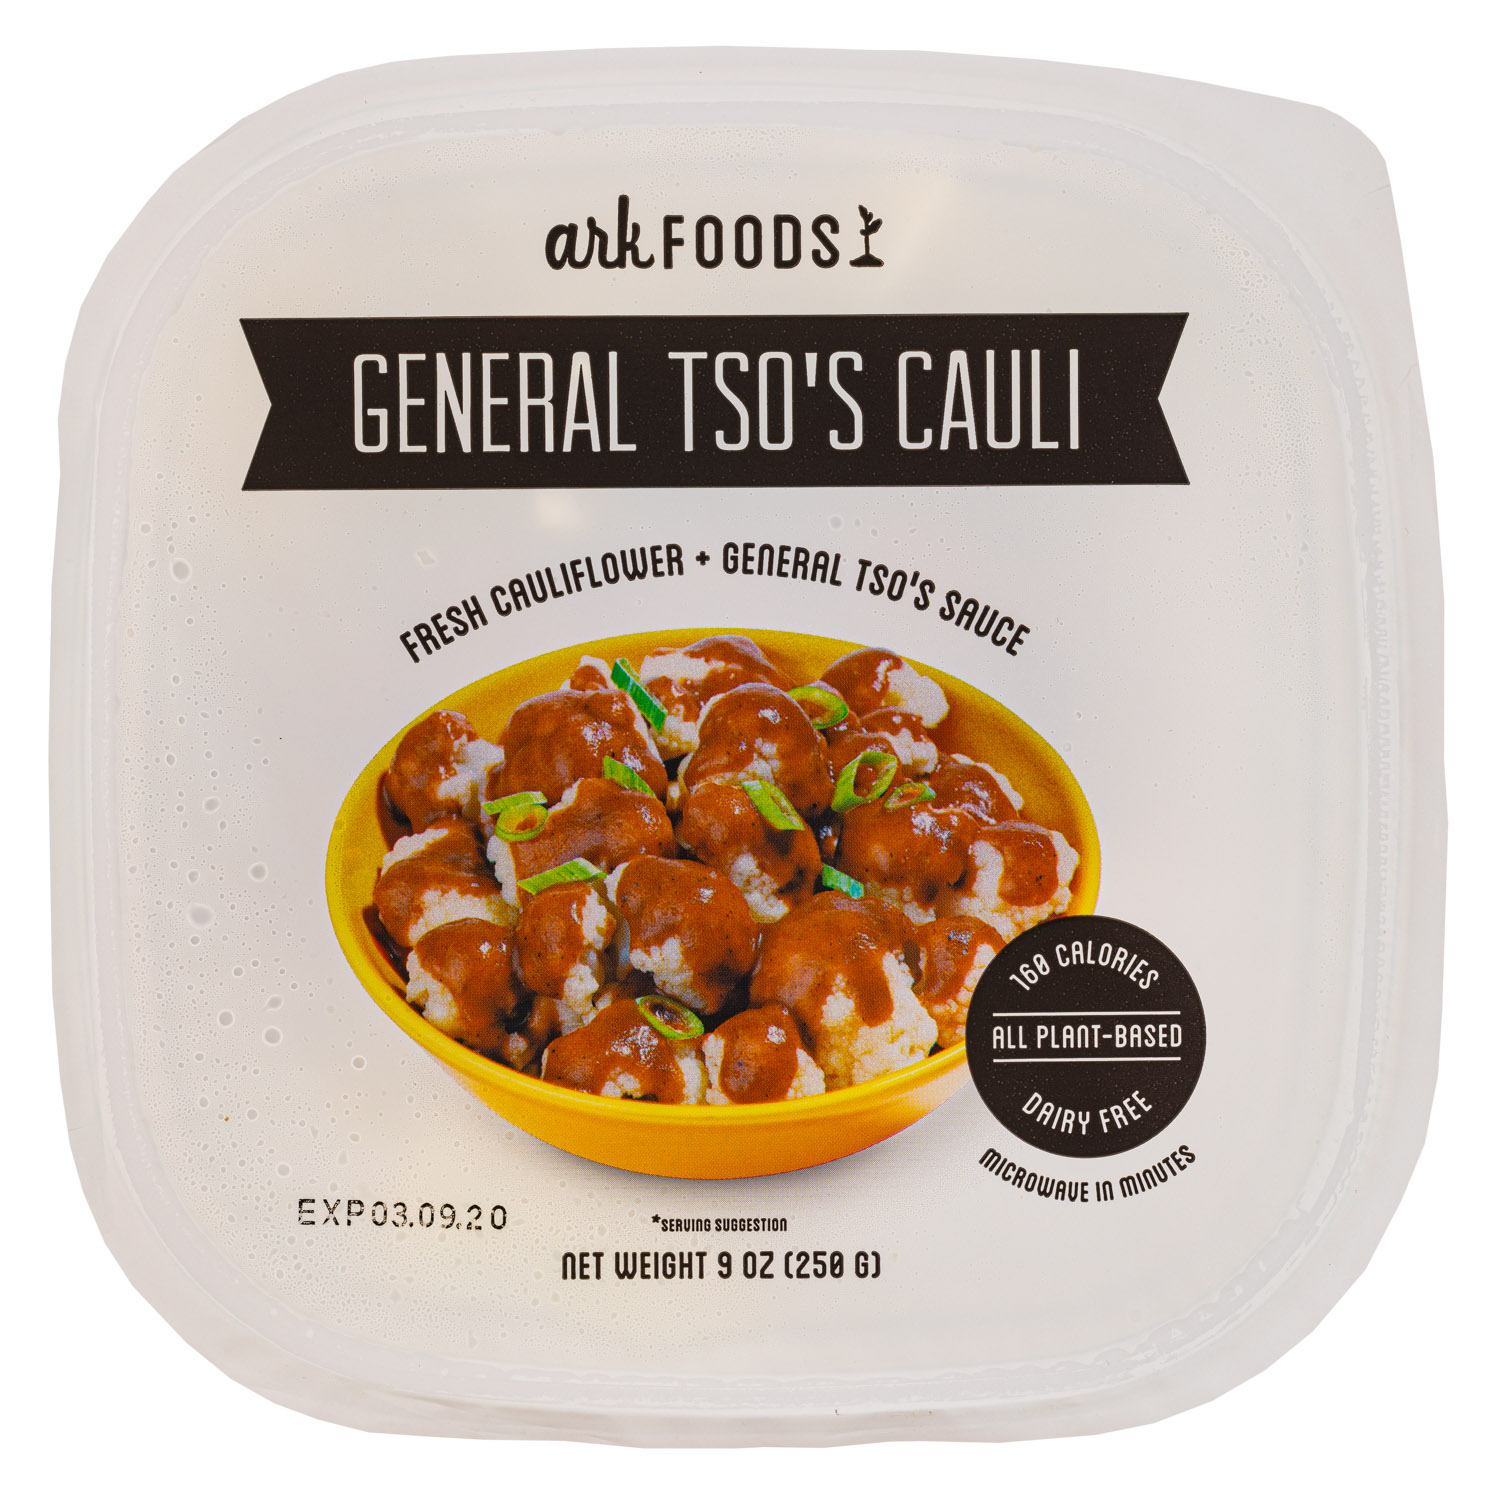 General Tso's Cauli (2020)